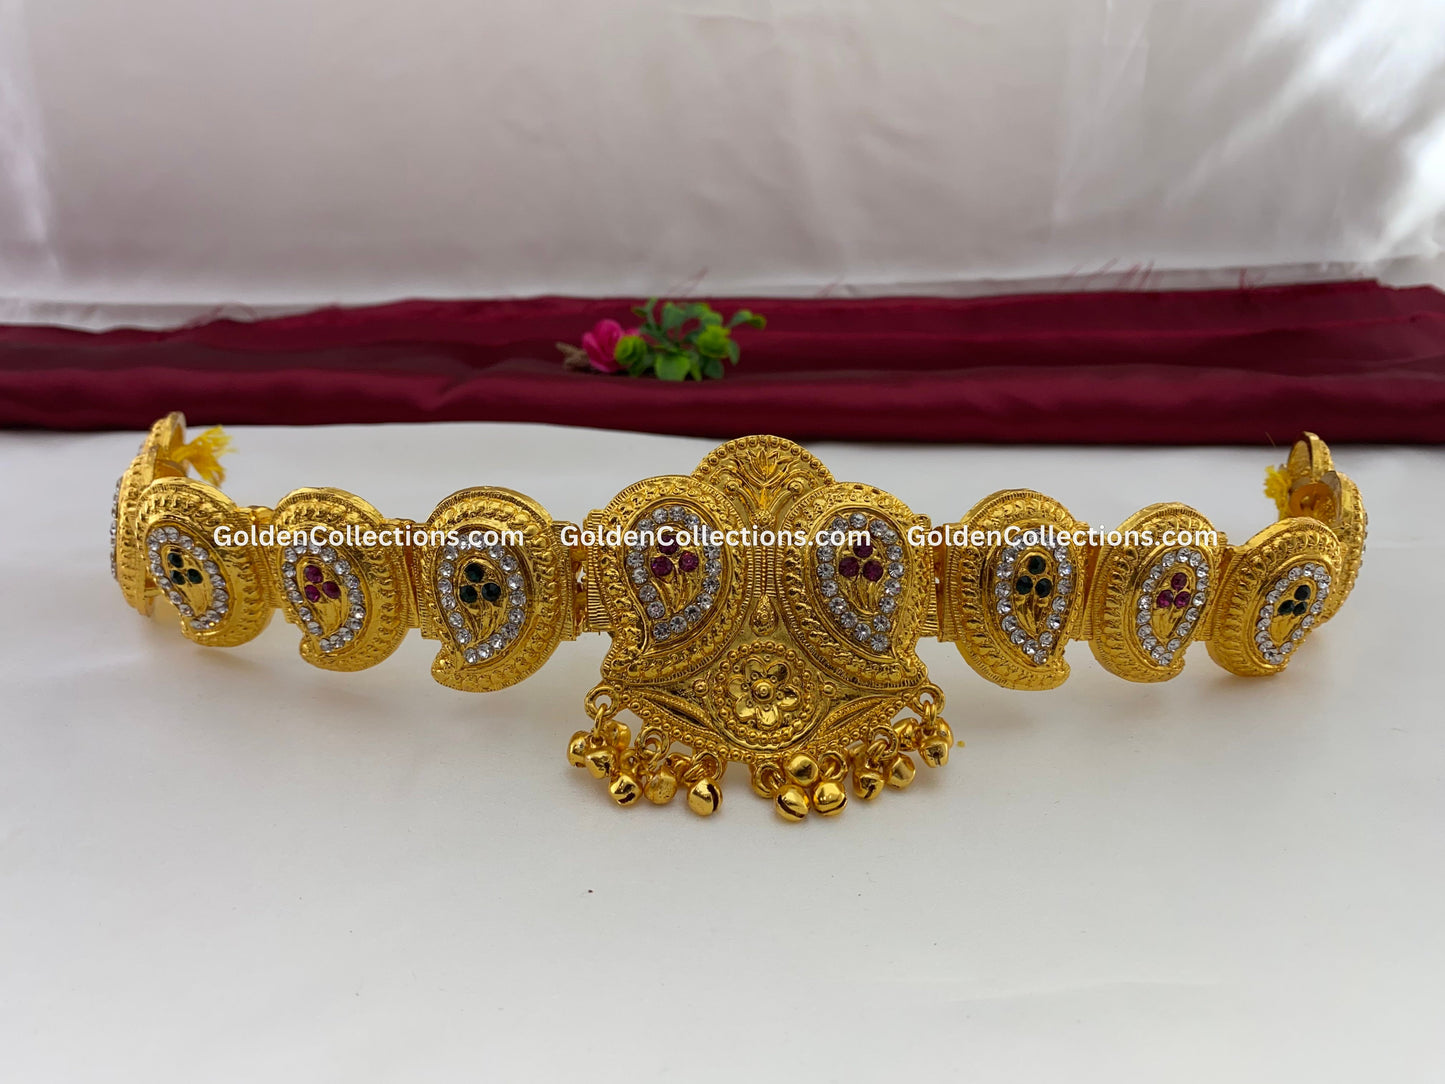 Kempu Vaddanam for Bharatanatyam - Temple Jewelry Waist Belt BWB-011 3